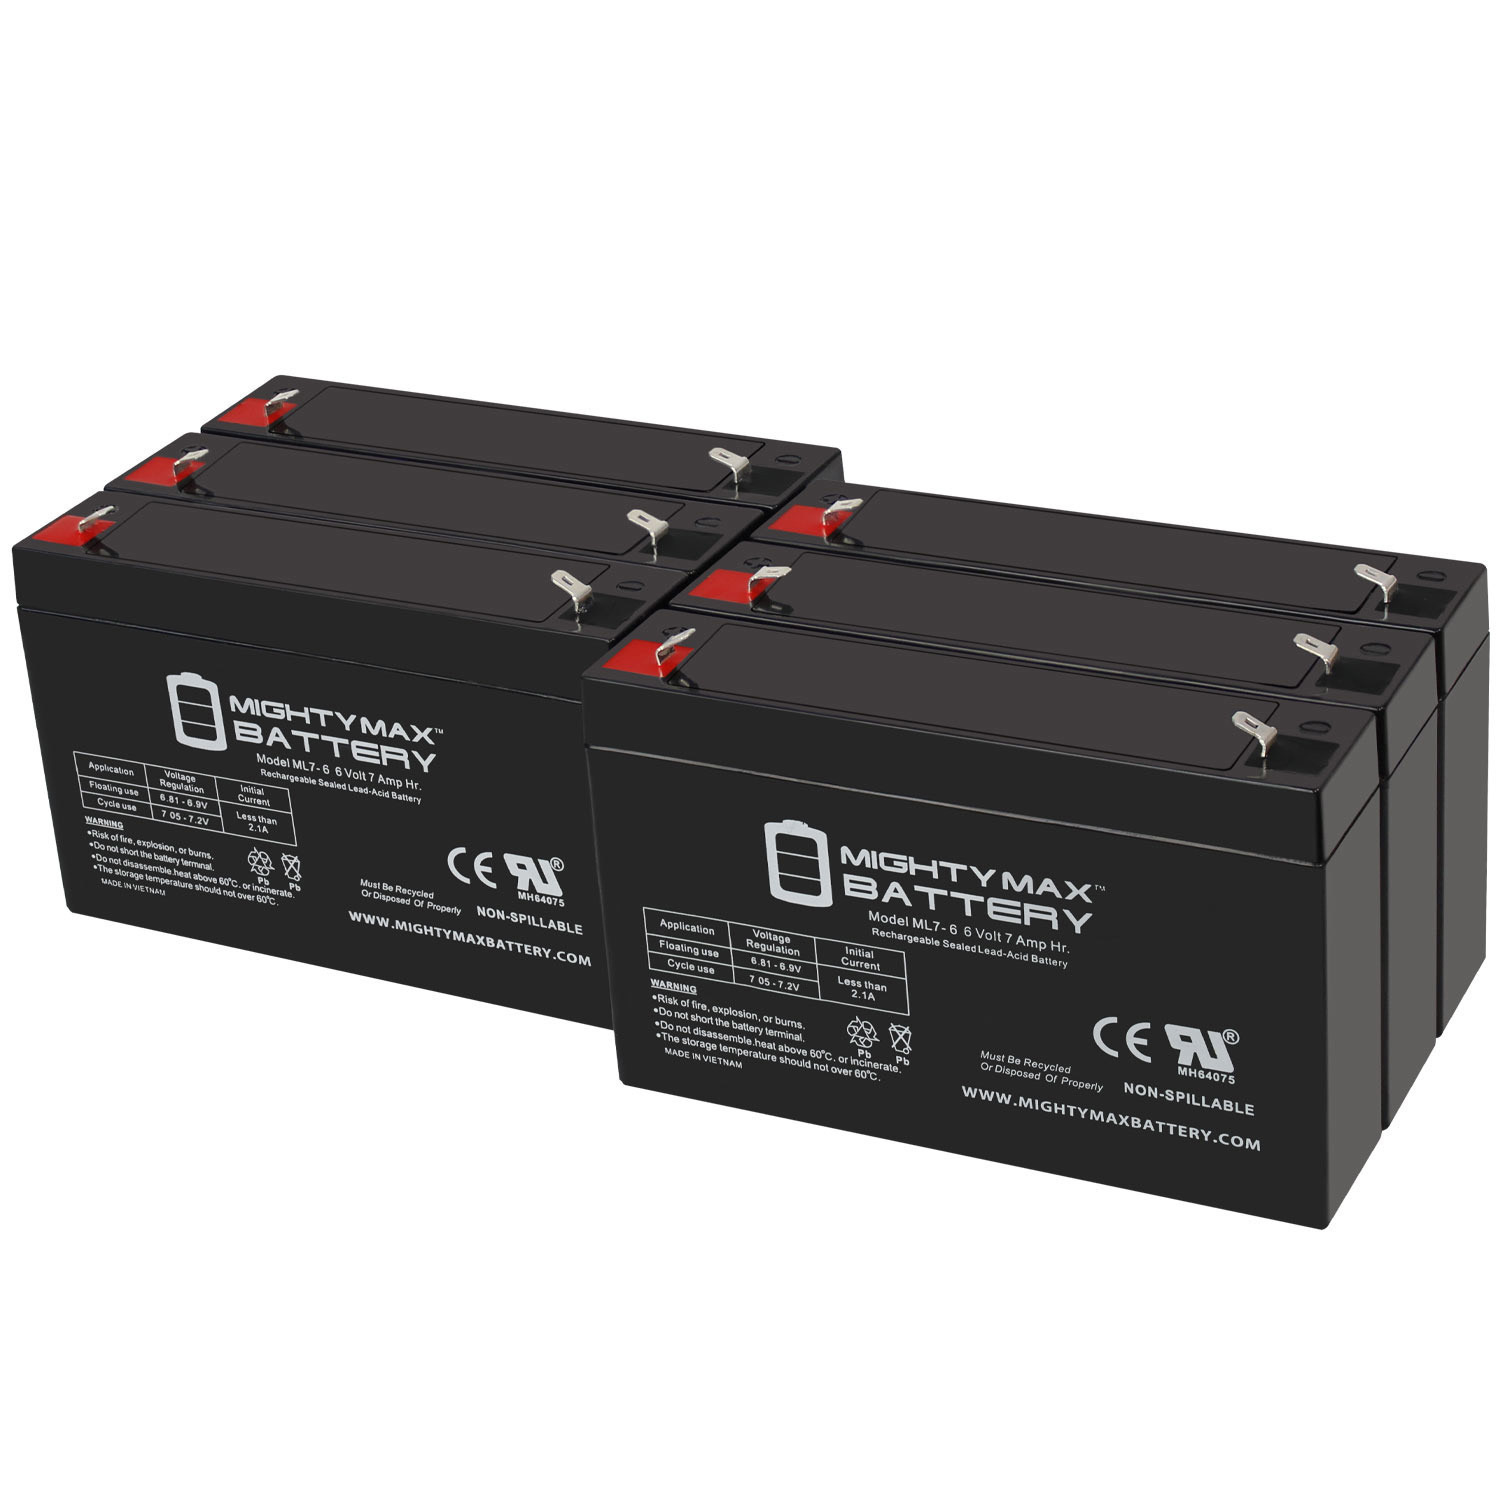 6V 7Ah SLA Replacement Battery for Diamec DMU6-8 - 6 Pack